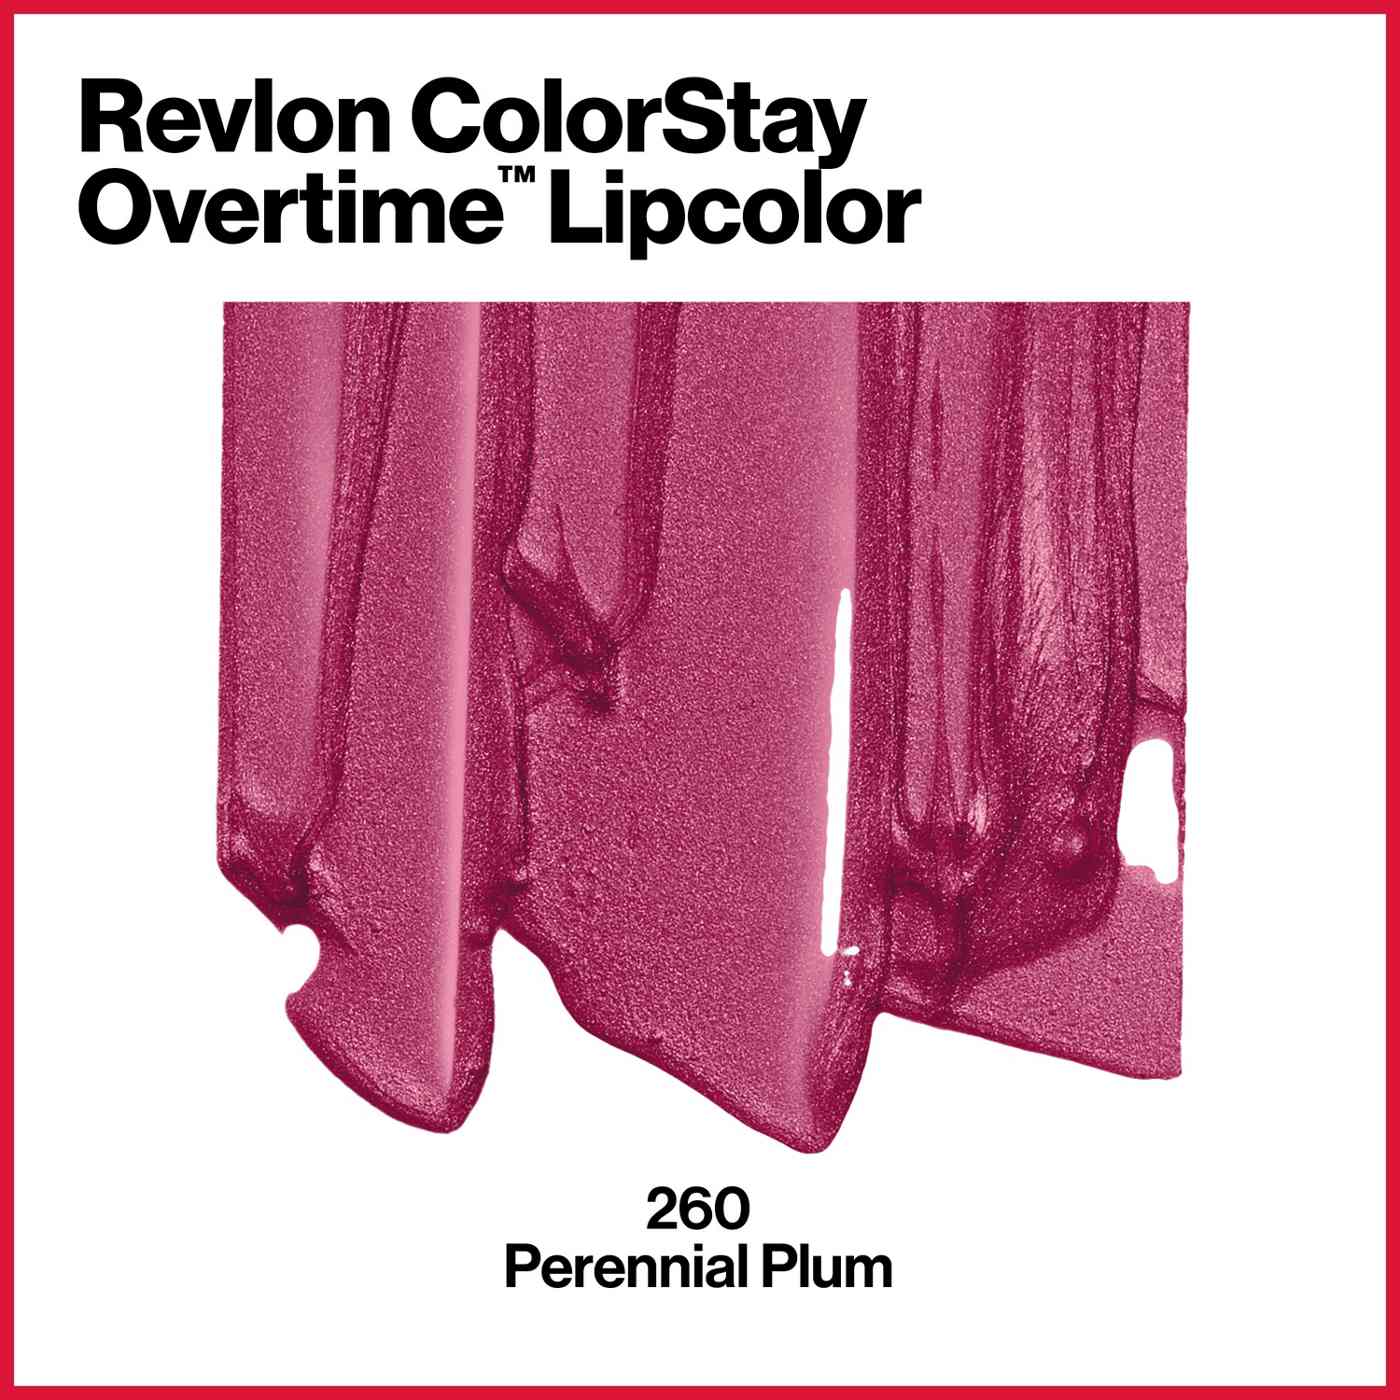 Revlon ColorStay Overtime Lipcolor - 260 Perennial Plum; image 3 of 8